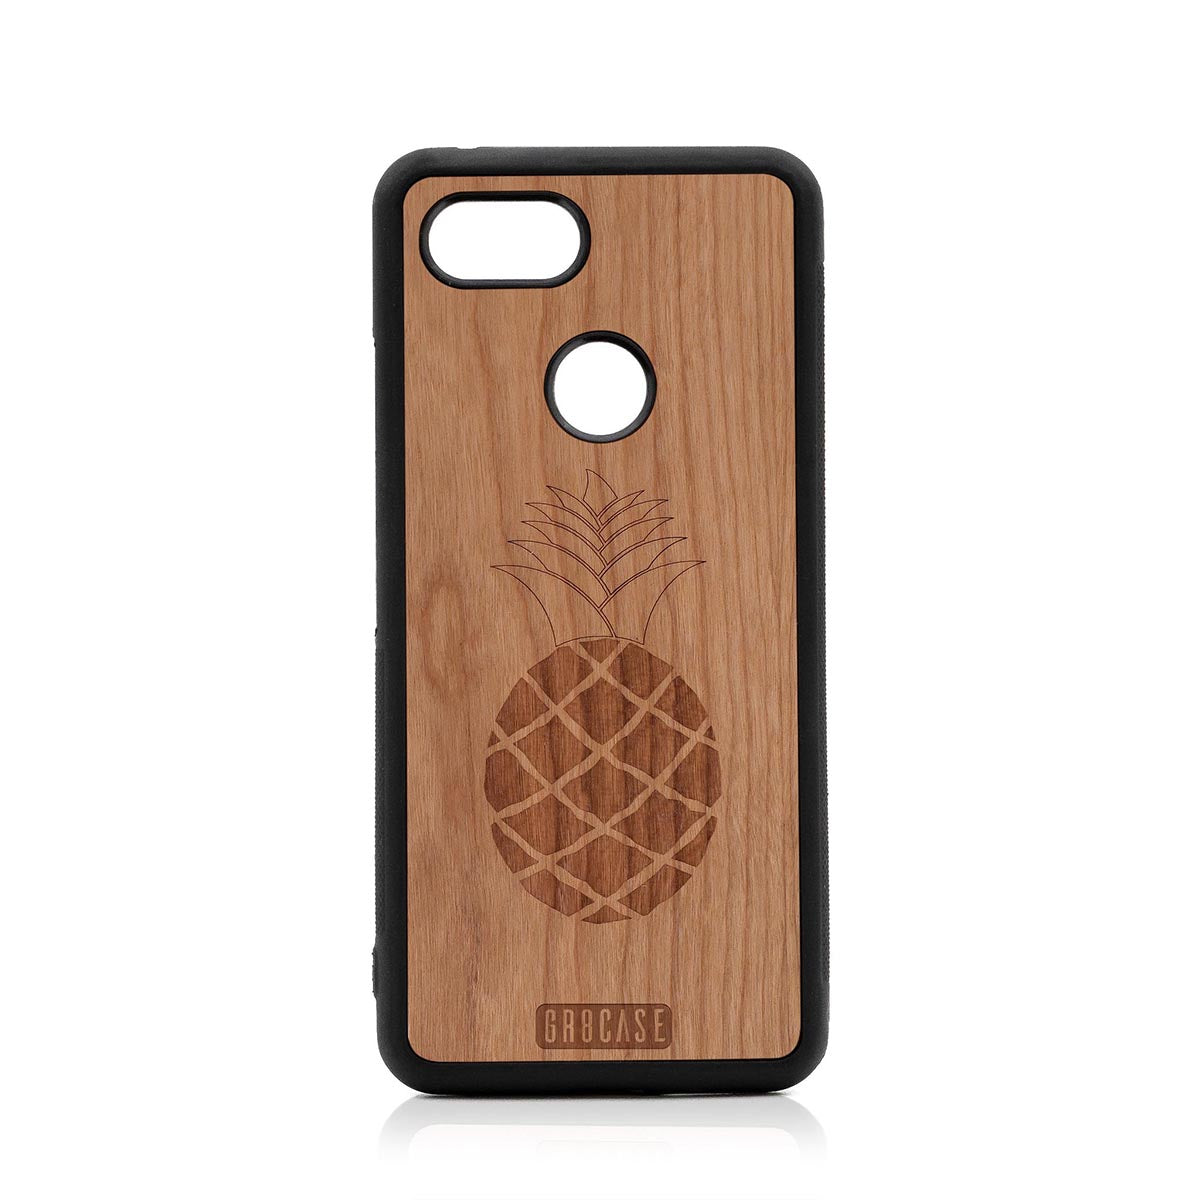 Pineapple Design Wood Case Google Pixel 3 by GR8CASE